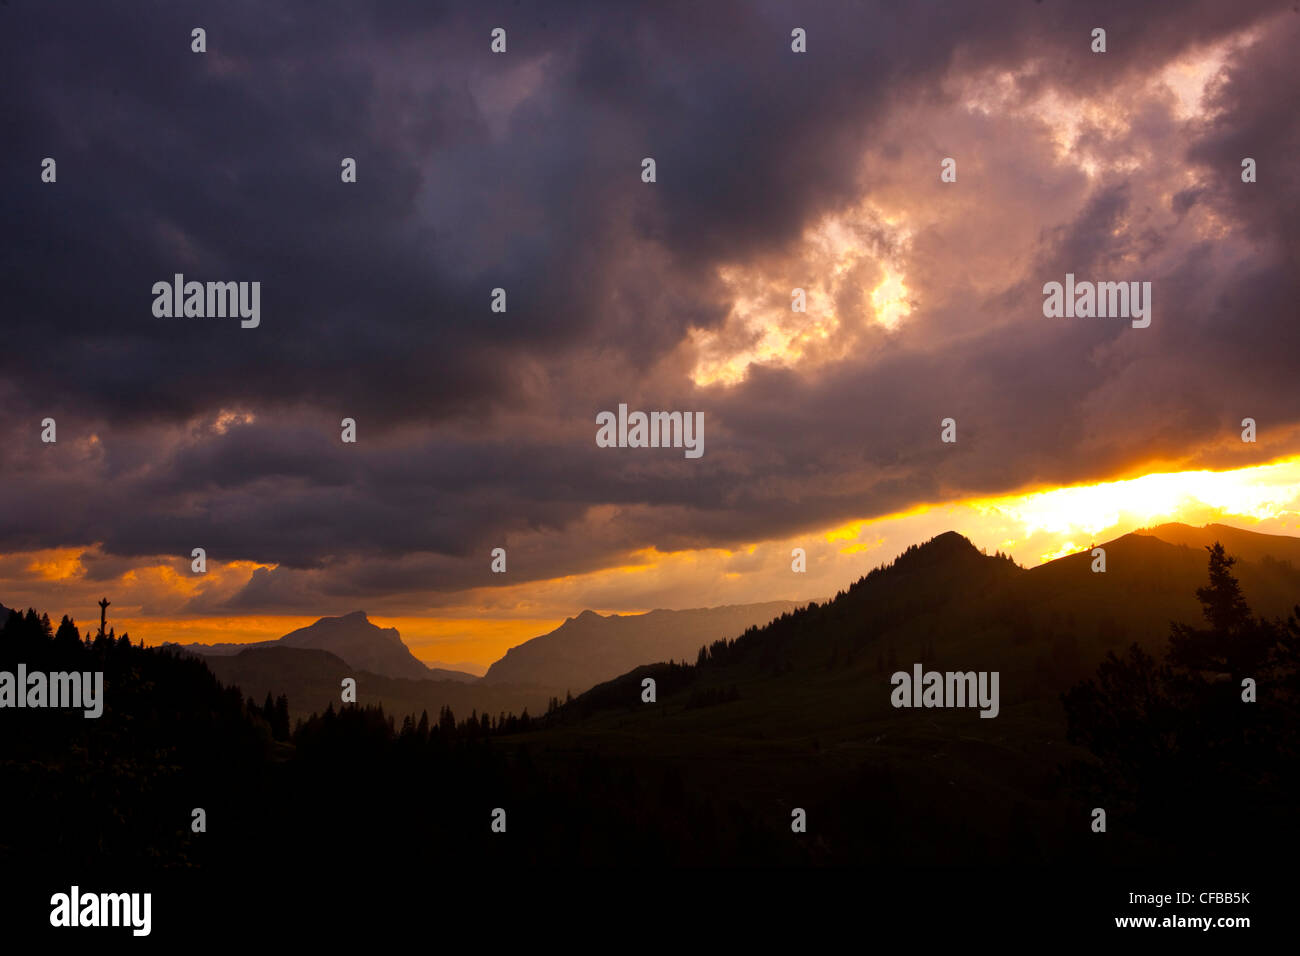 Tree, trees, scenery, weather, clouds, cloud, canton, Nidwalden, Switzerland, Europe, Glaubenbüelen, evening, silhouette Stock Photo